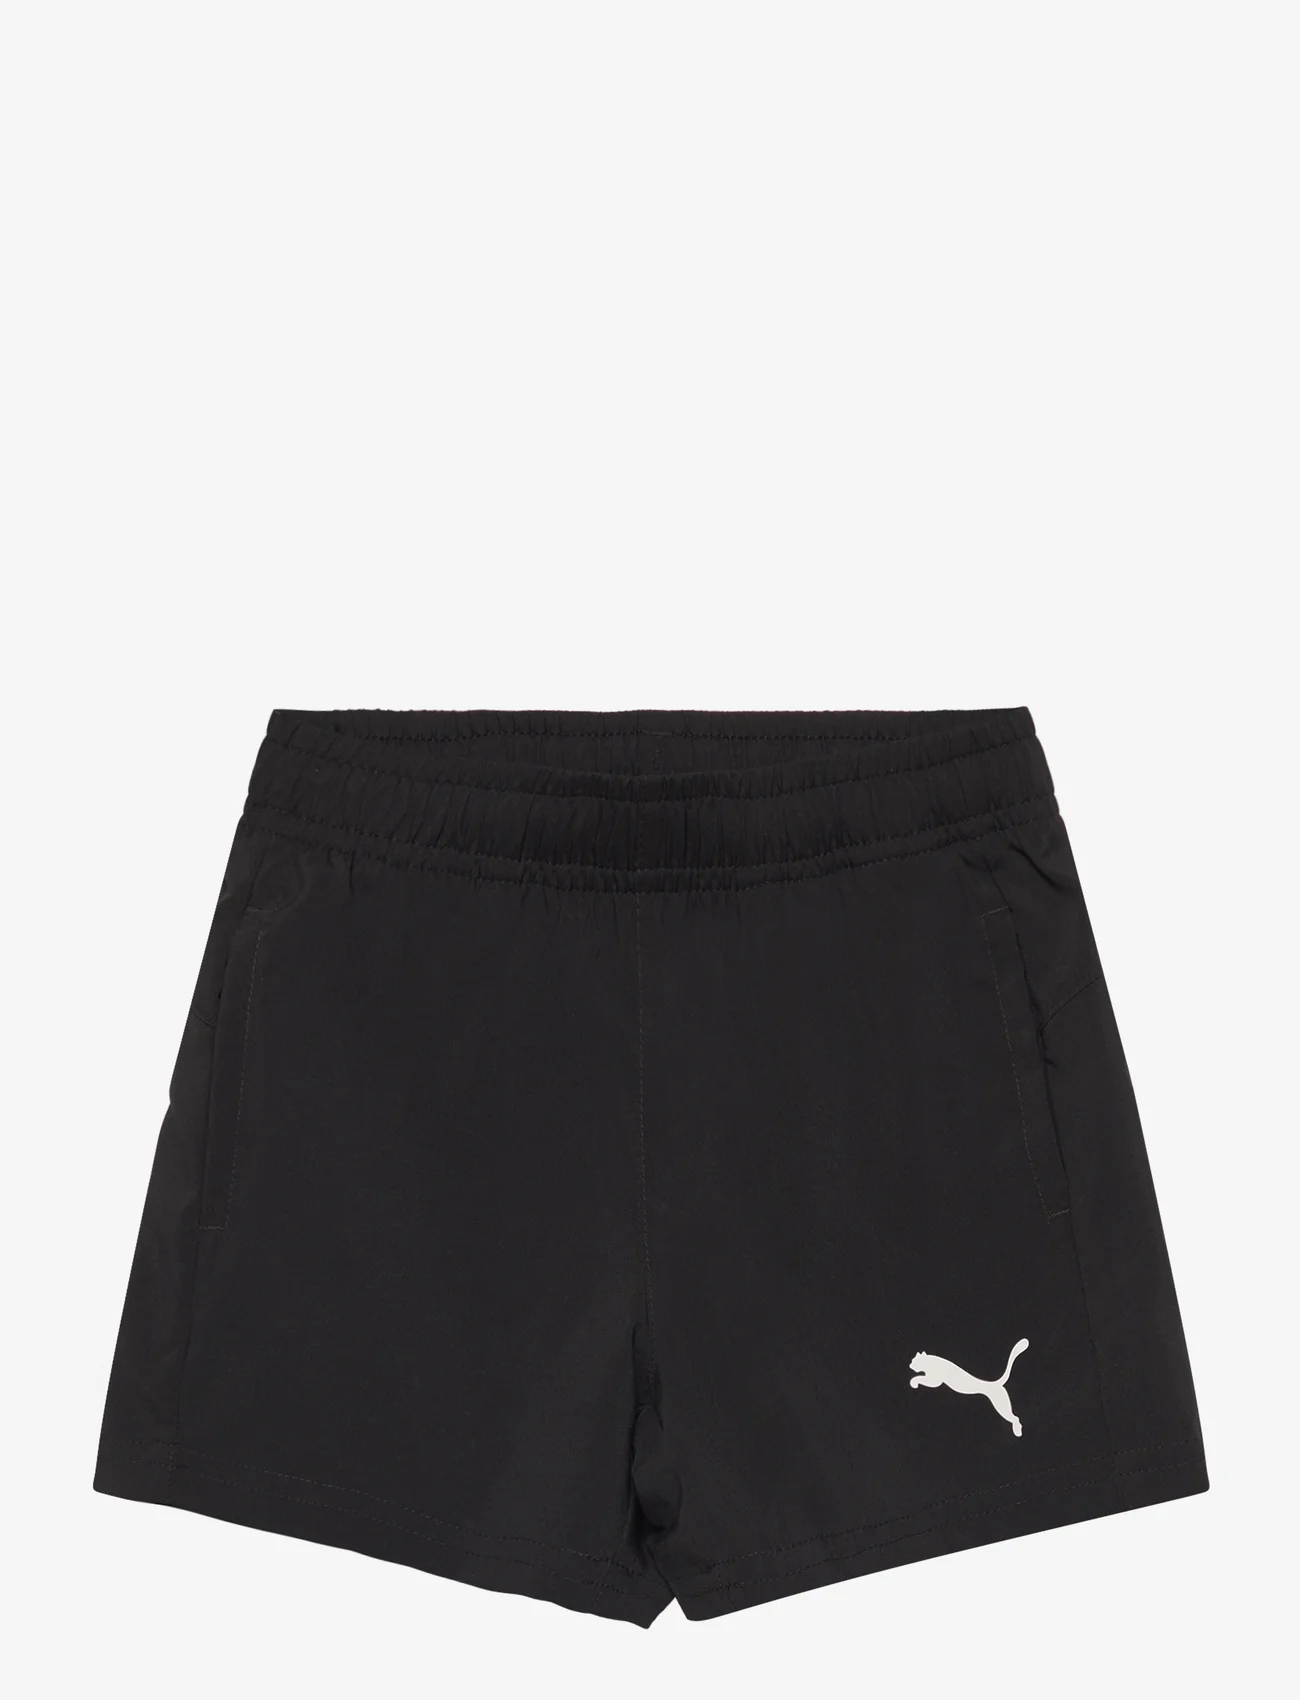 PUMA - ACTIVE Woven Shorts B - sportsshorts - puma black - 0